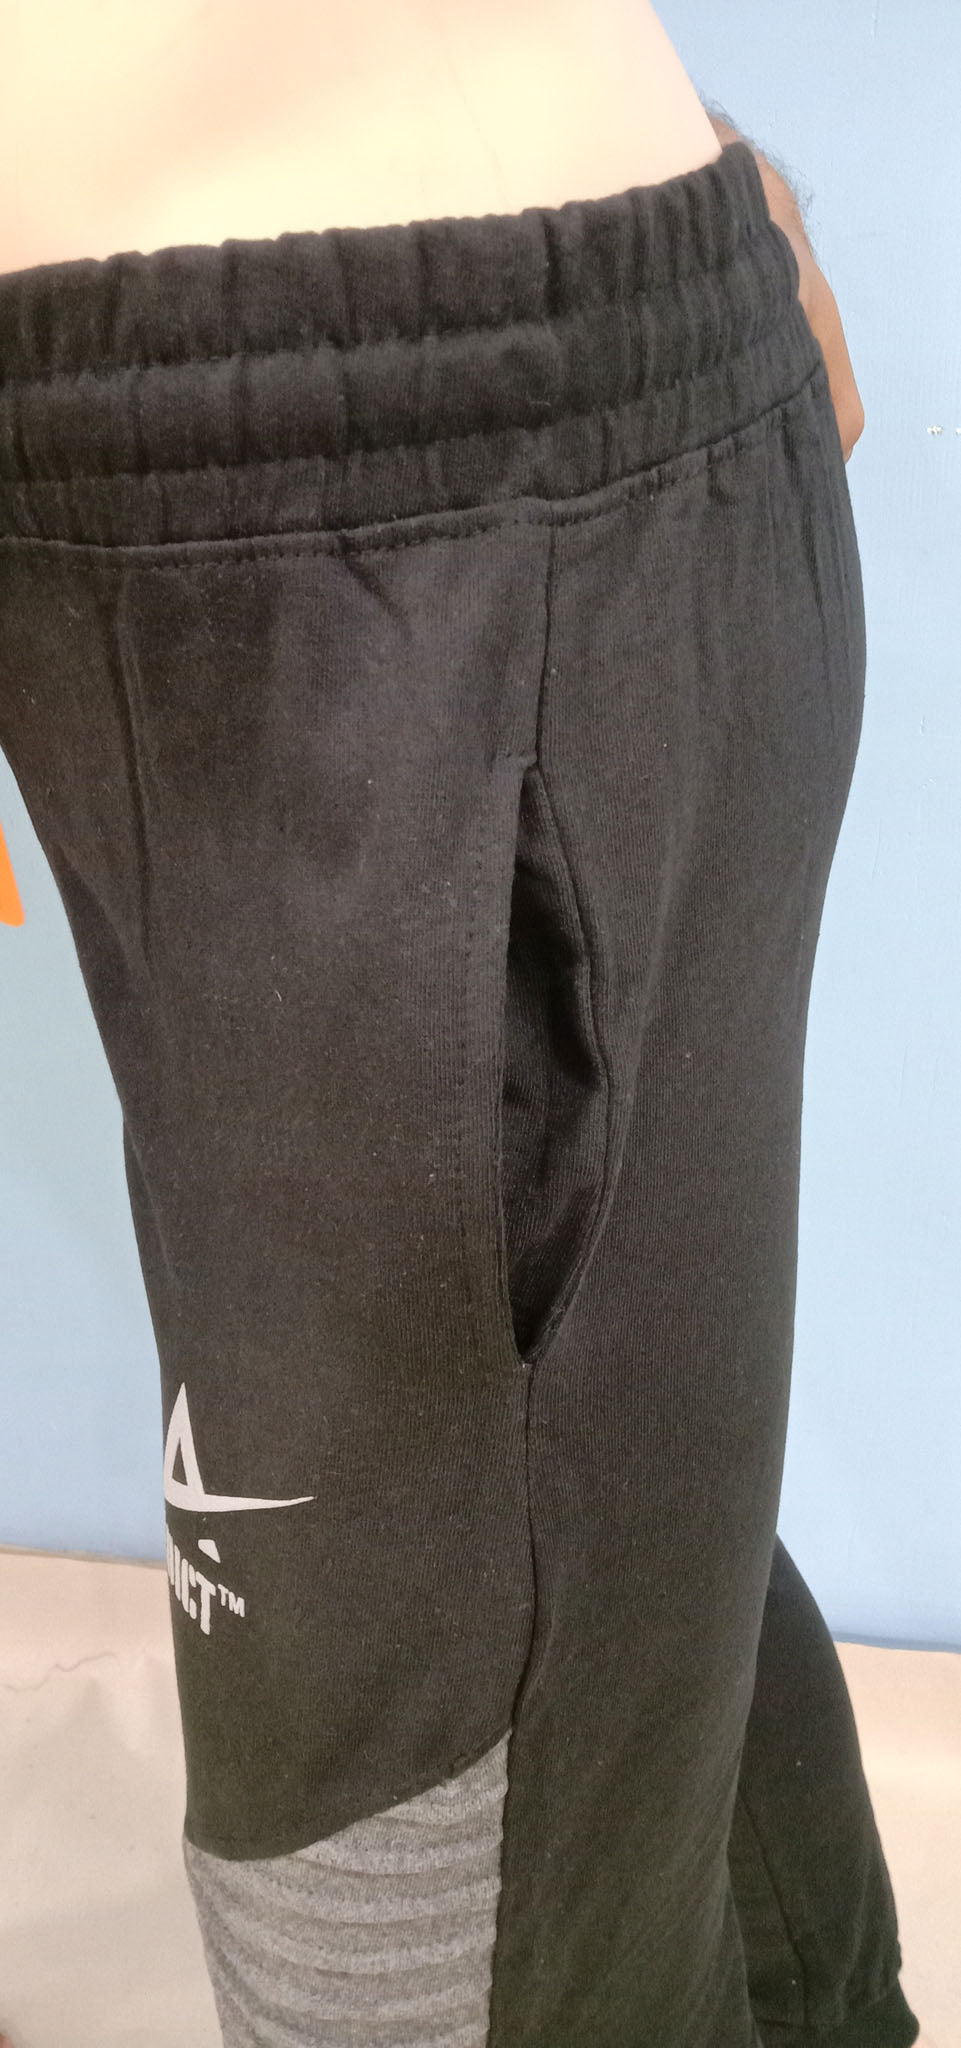 Branded Super Designed Night Pant/Track Suit Jogger Model for men L to 2XL sizes 5 Designs PS11